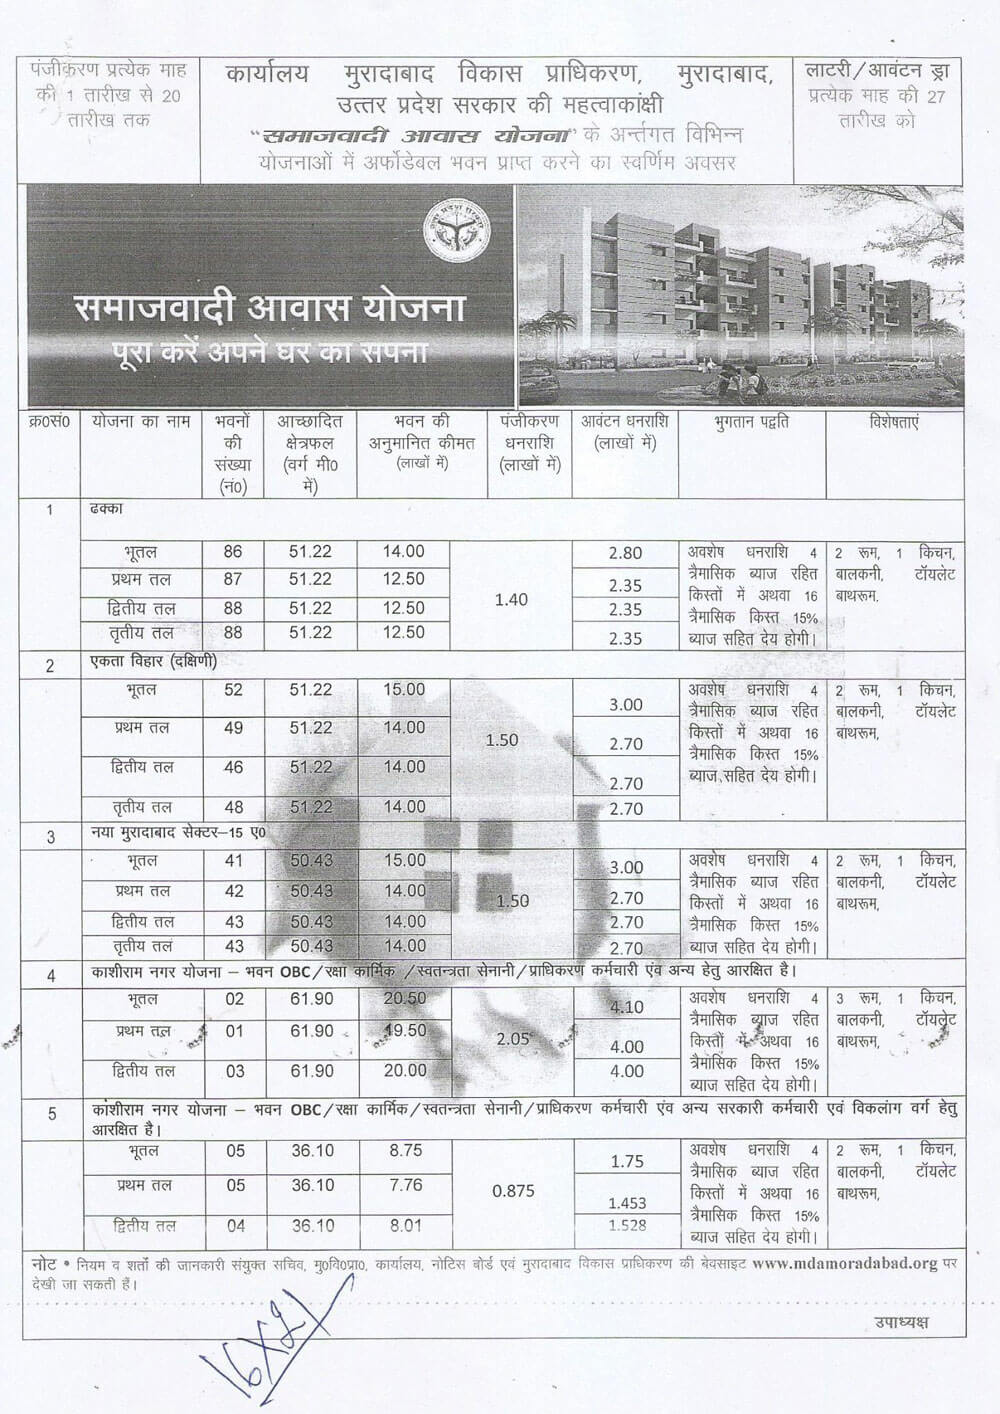 MDA Moradabad Samajwadi Awas Yojana New Housing Scheme 2016